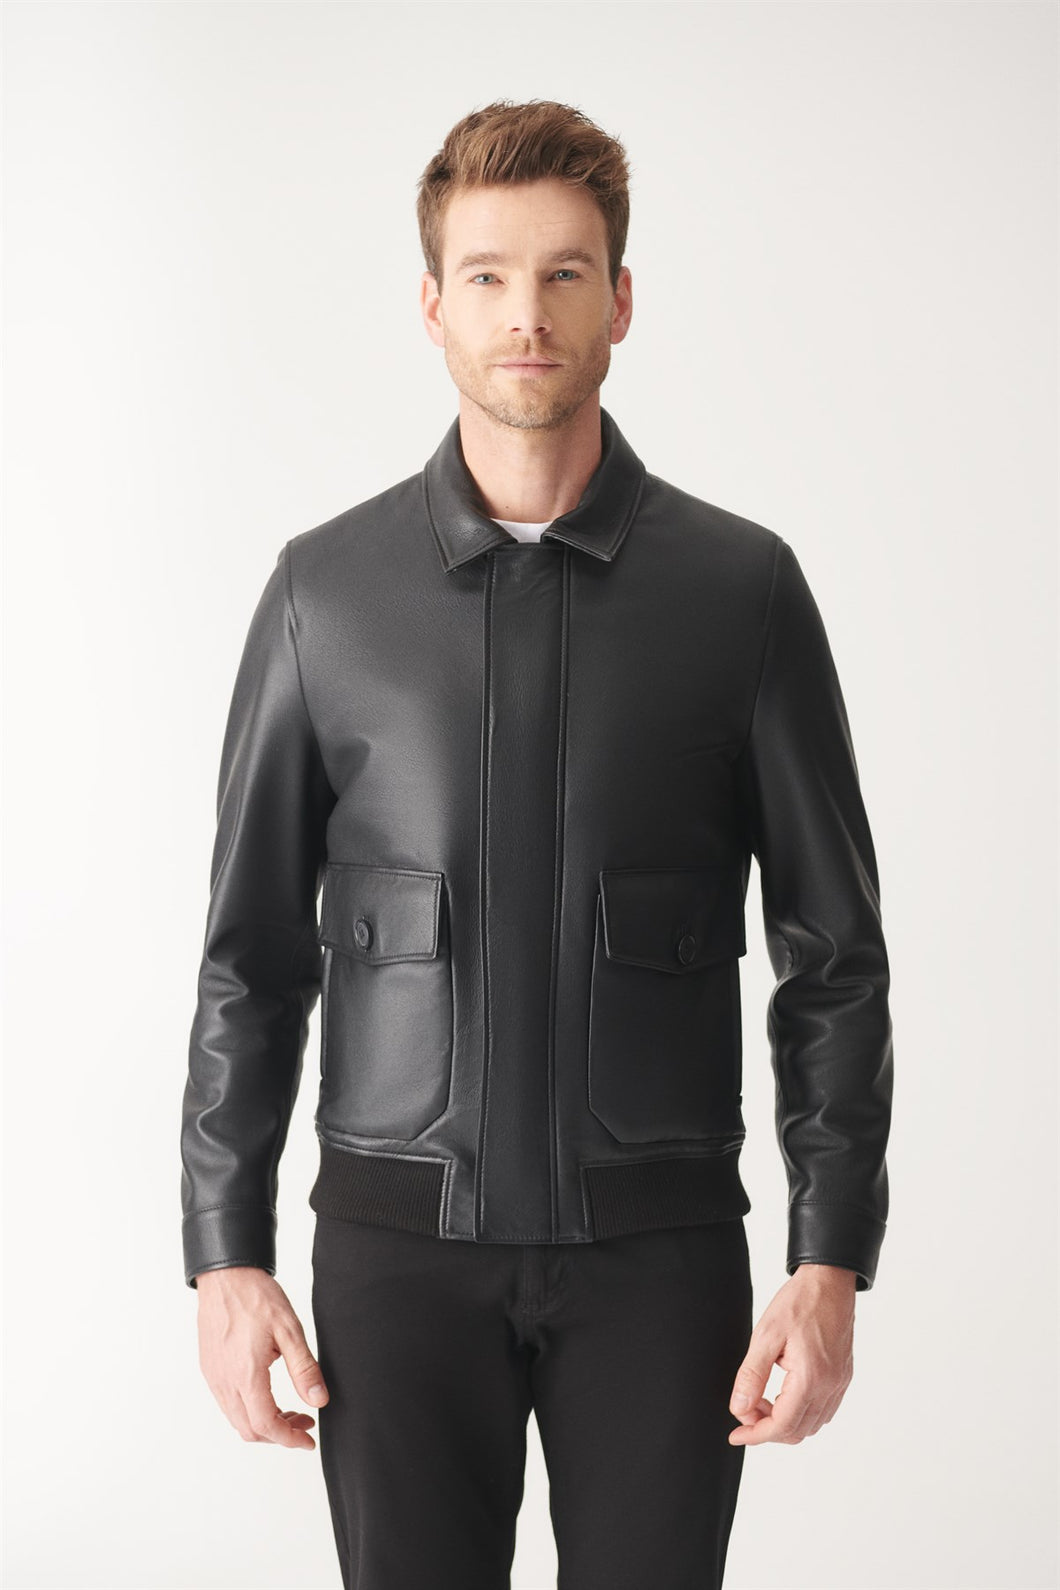 Black Bomber Leather Jacket for Men - Boneshia